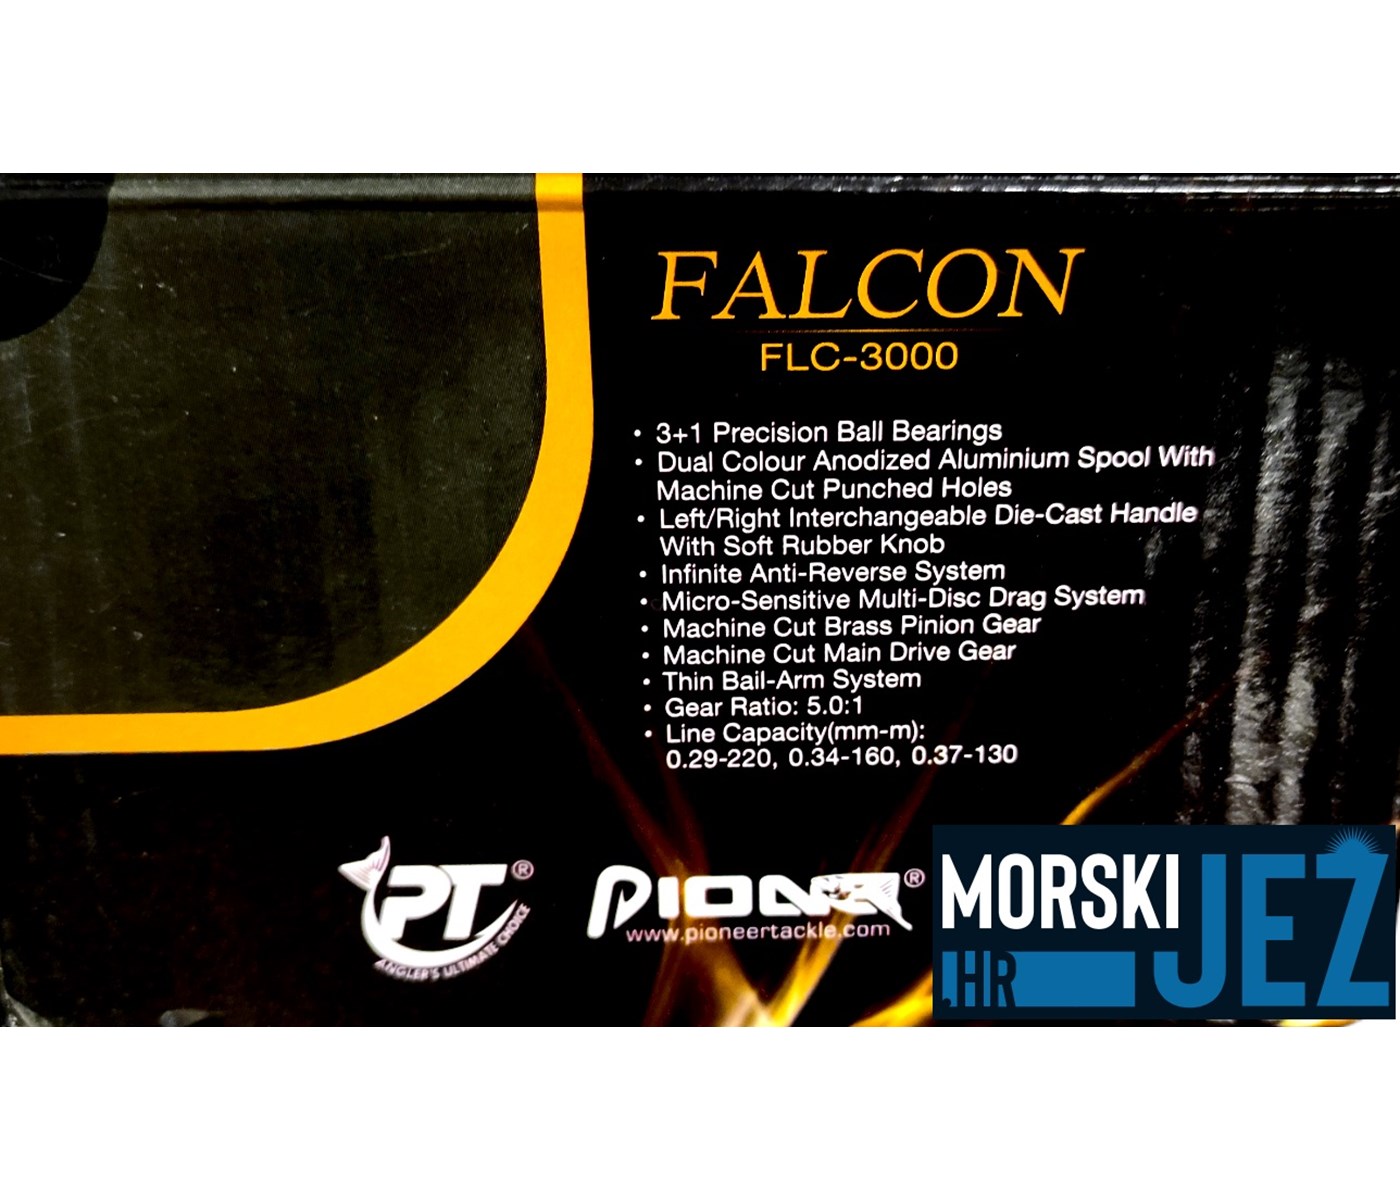 PIONEER ROLA FALCON FLC-3000